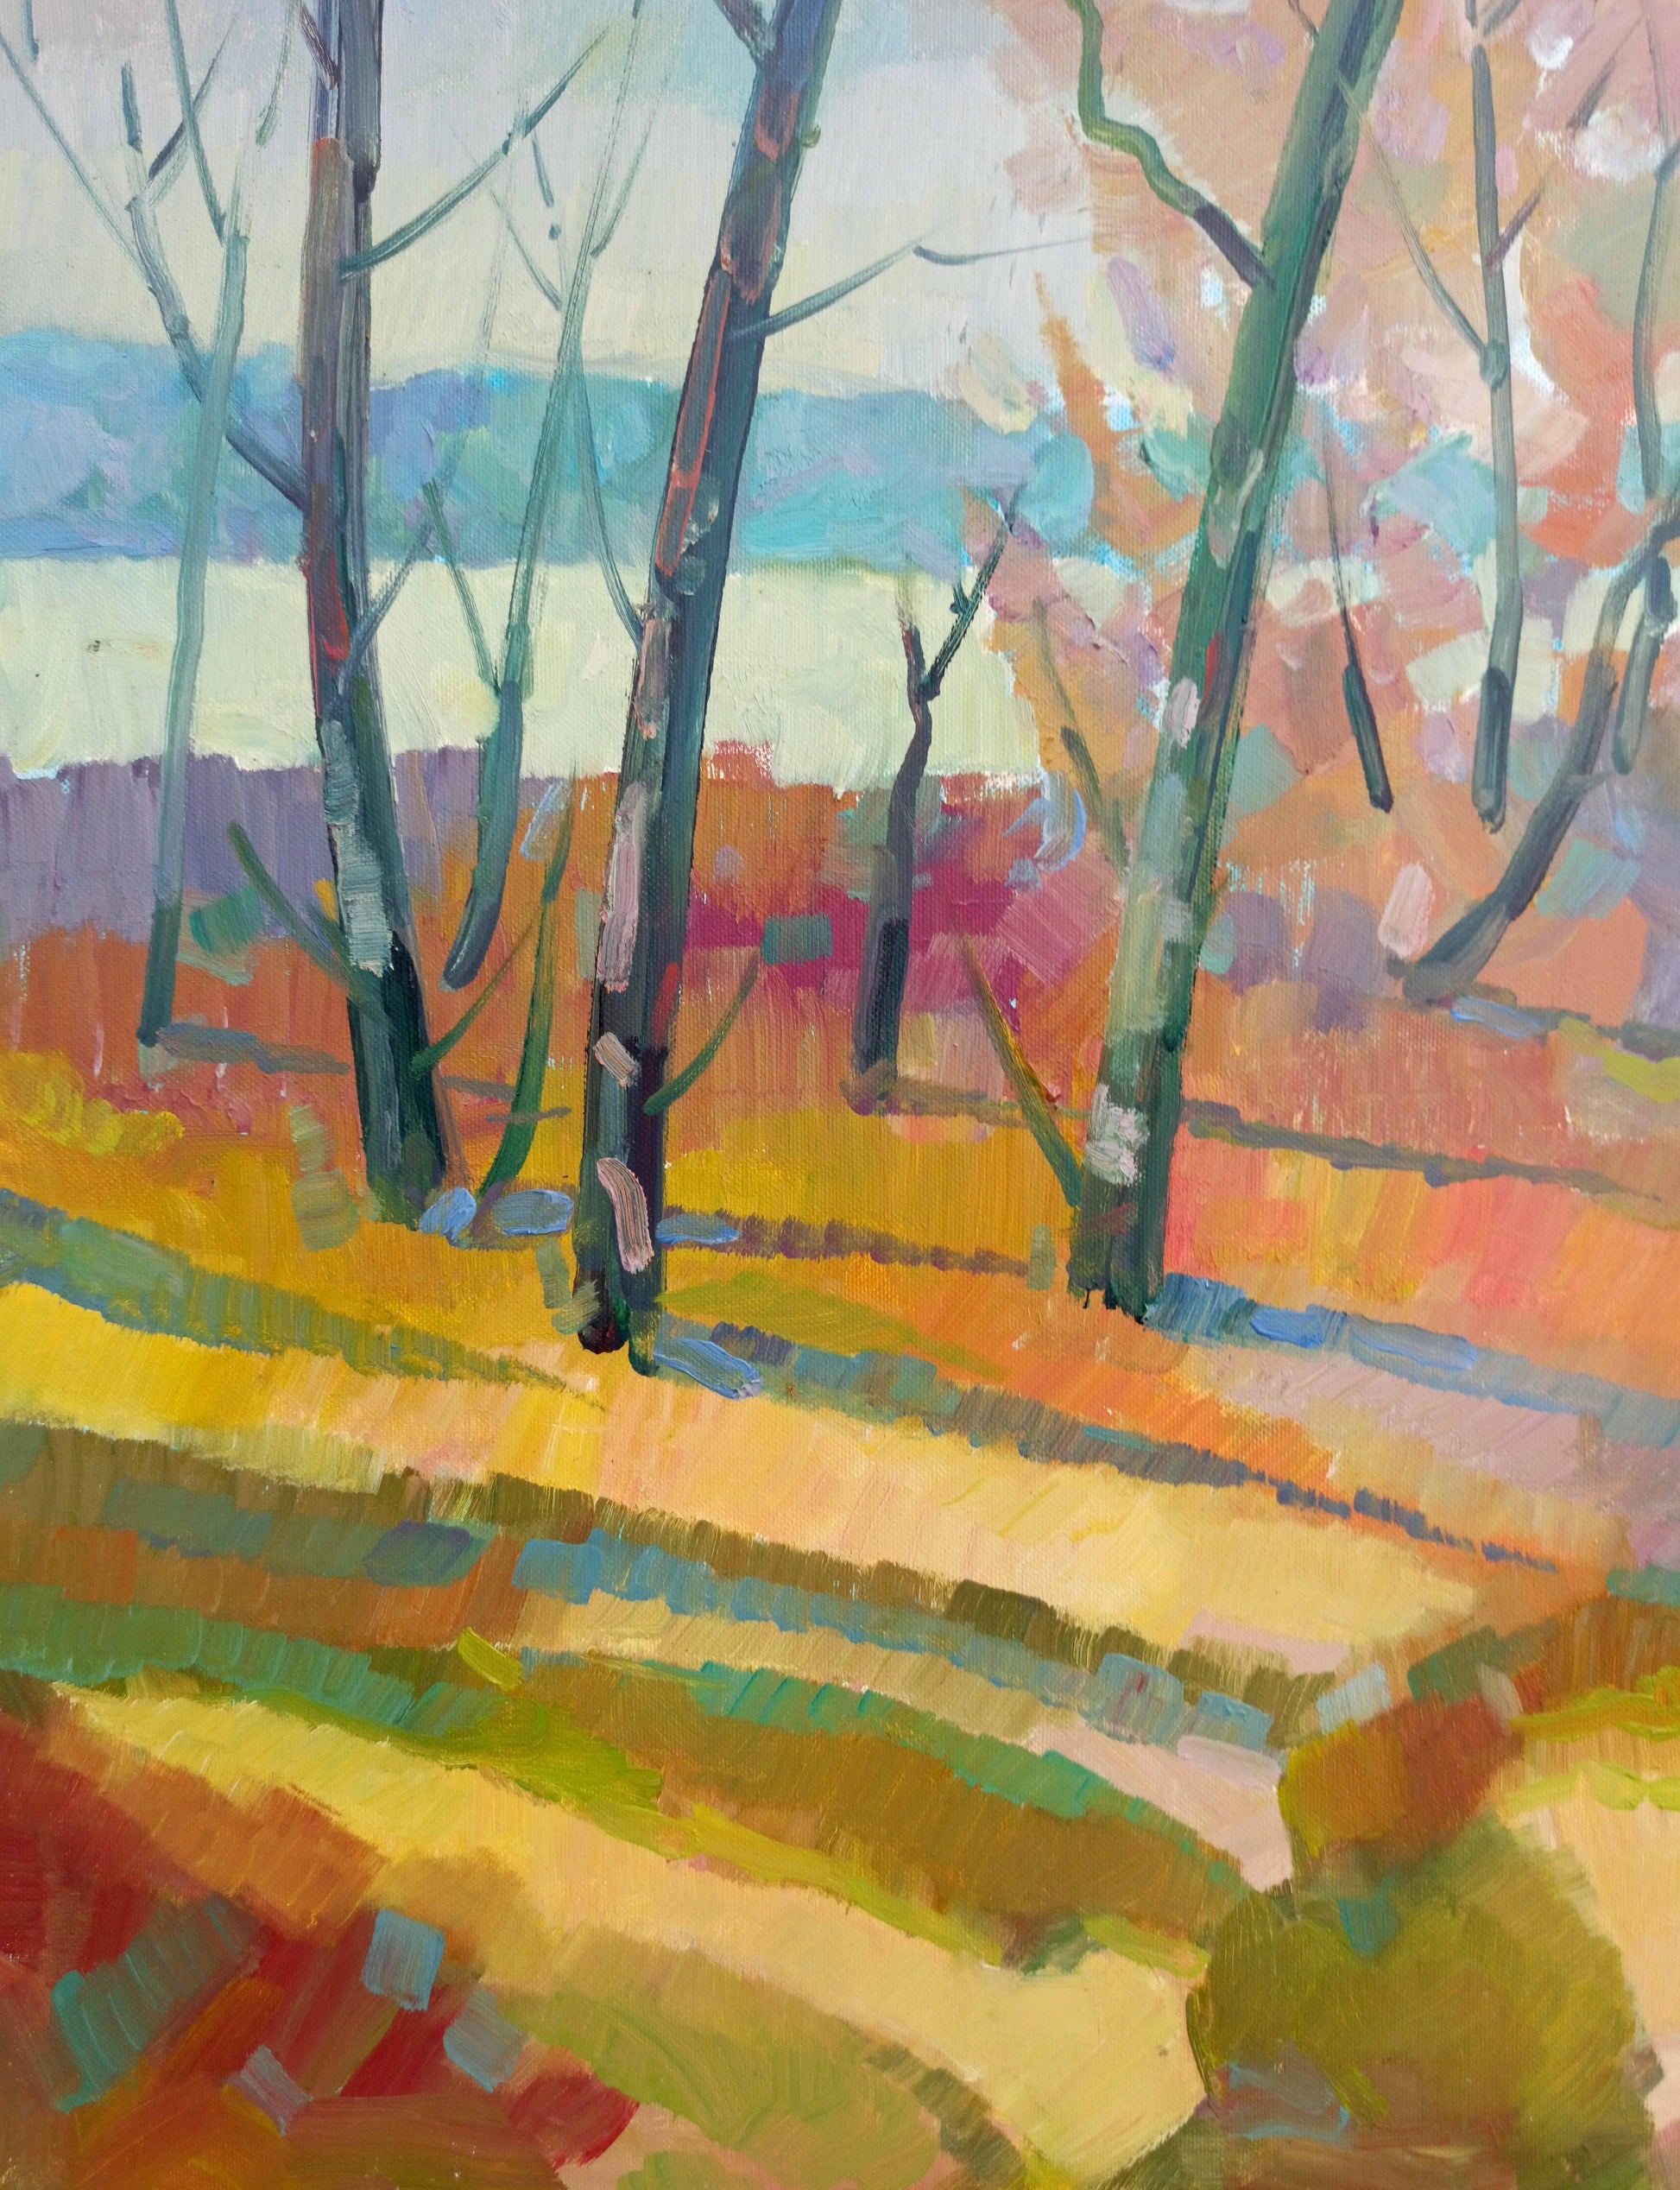 A spring landscape is captured in Peter Dobrev's oil painting